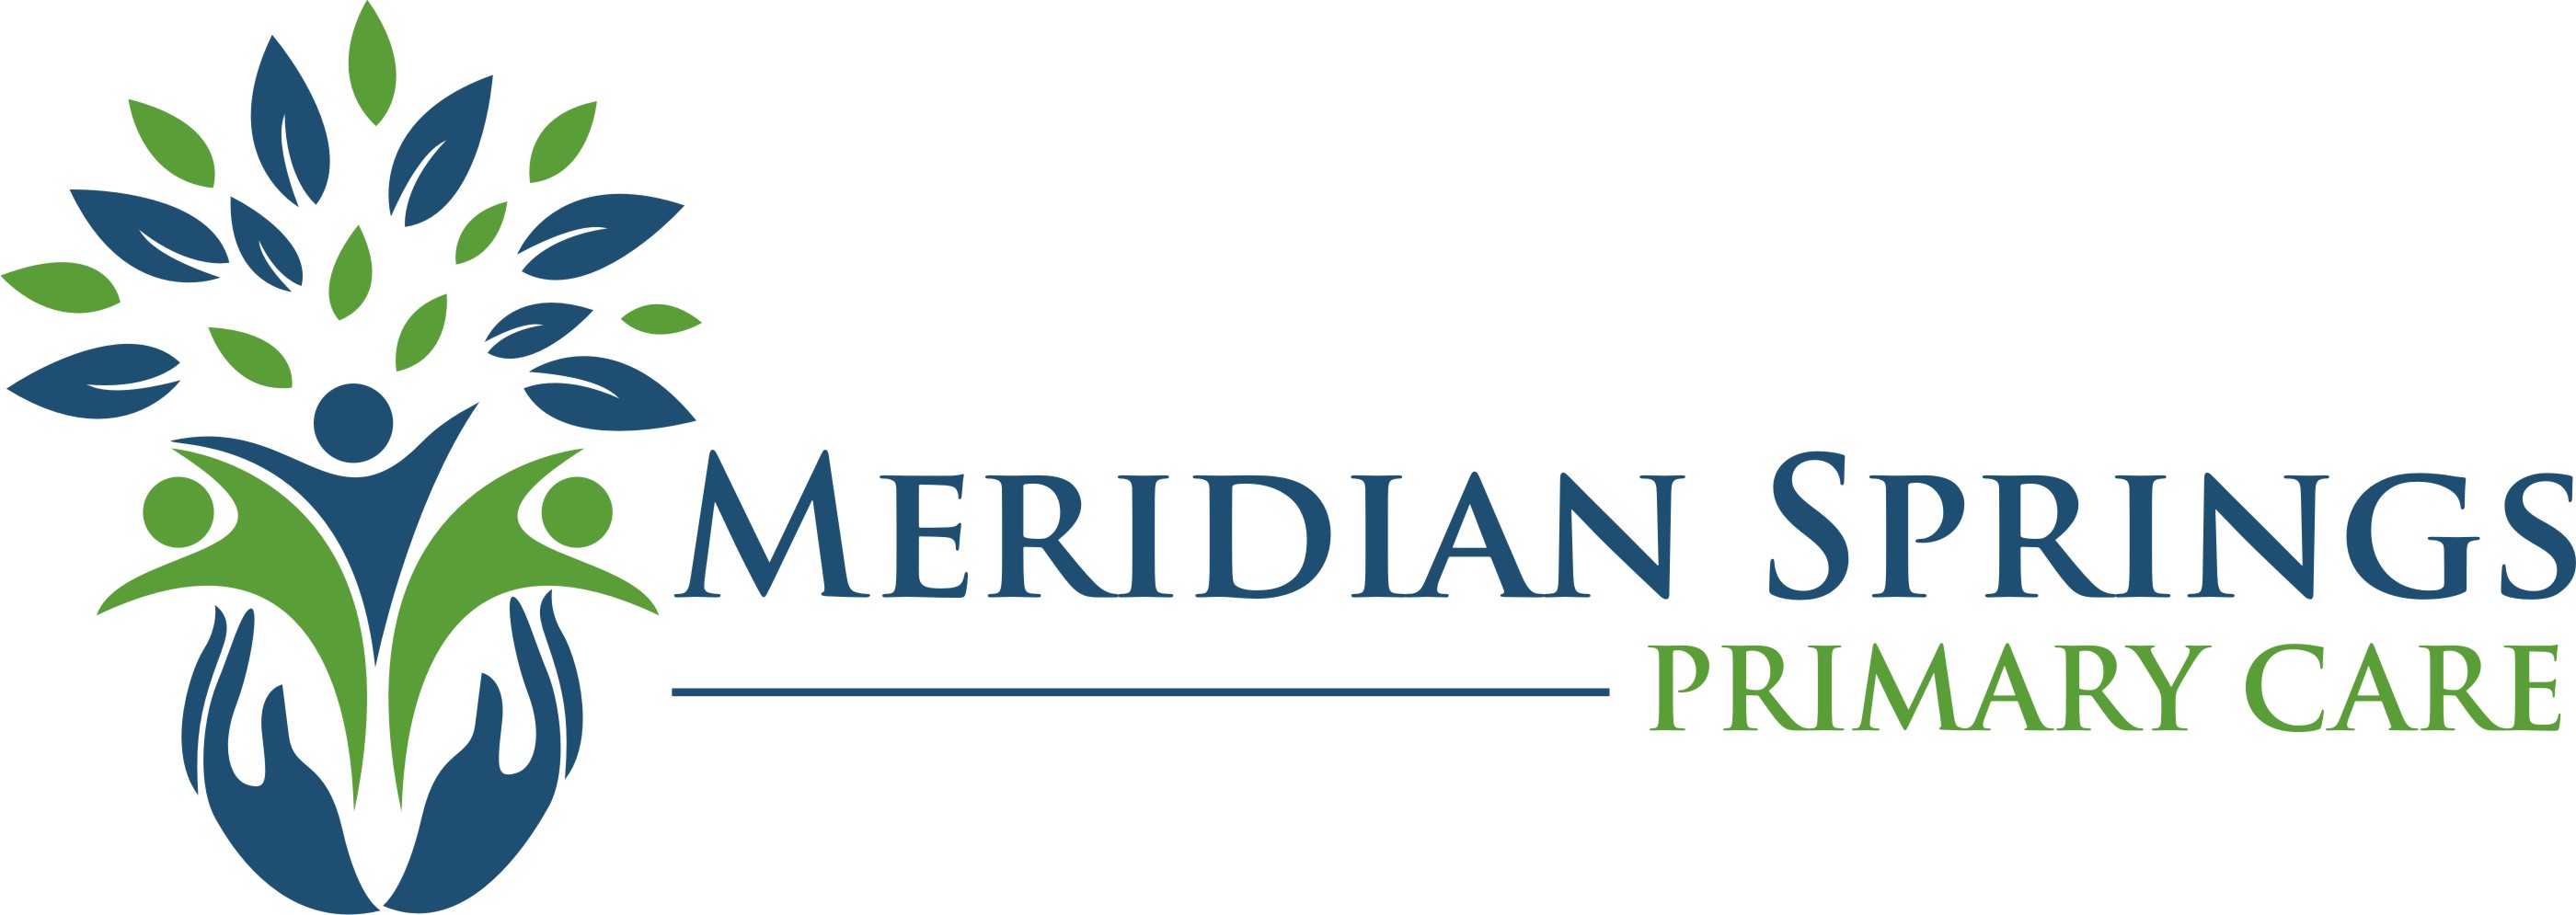 Meridian Springs Primary Care Logo